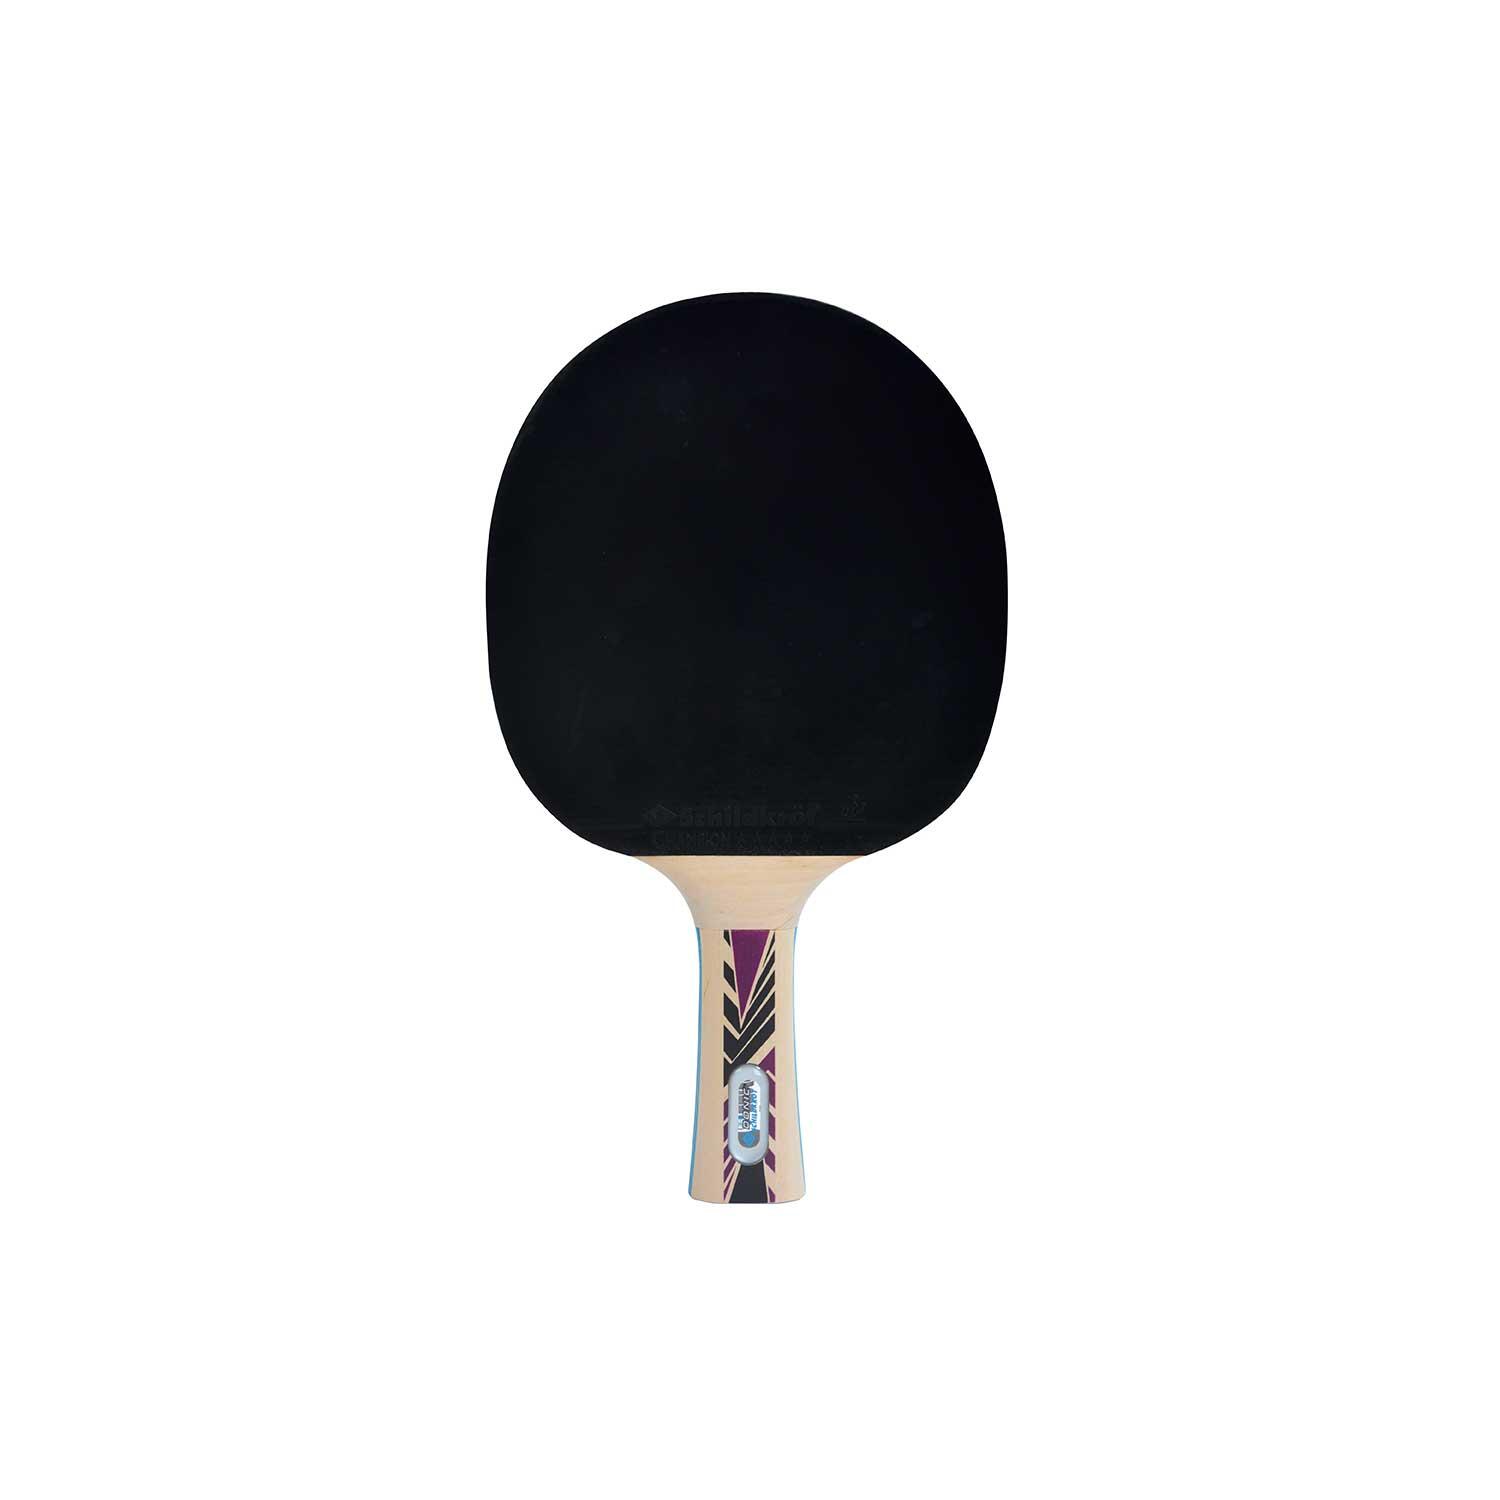 DONIC SCHILDKRÖT Legends 800 Table Tennis Bat (Black/Beige)